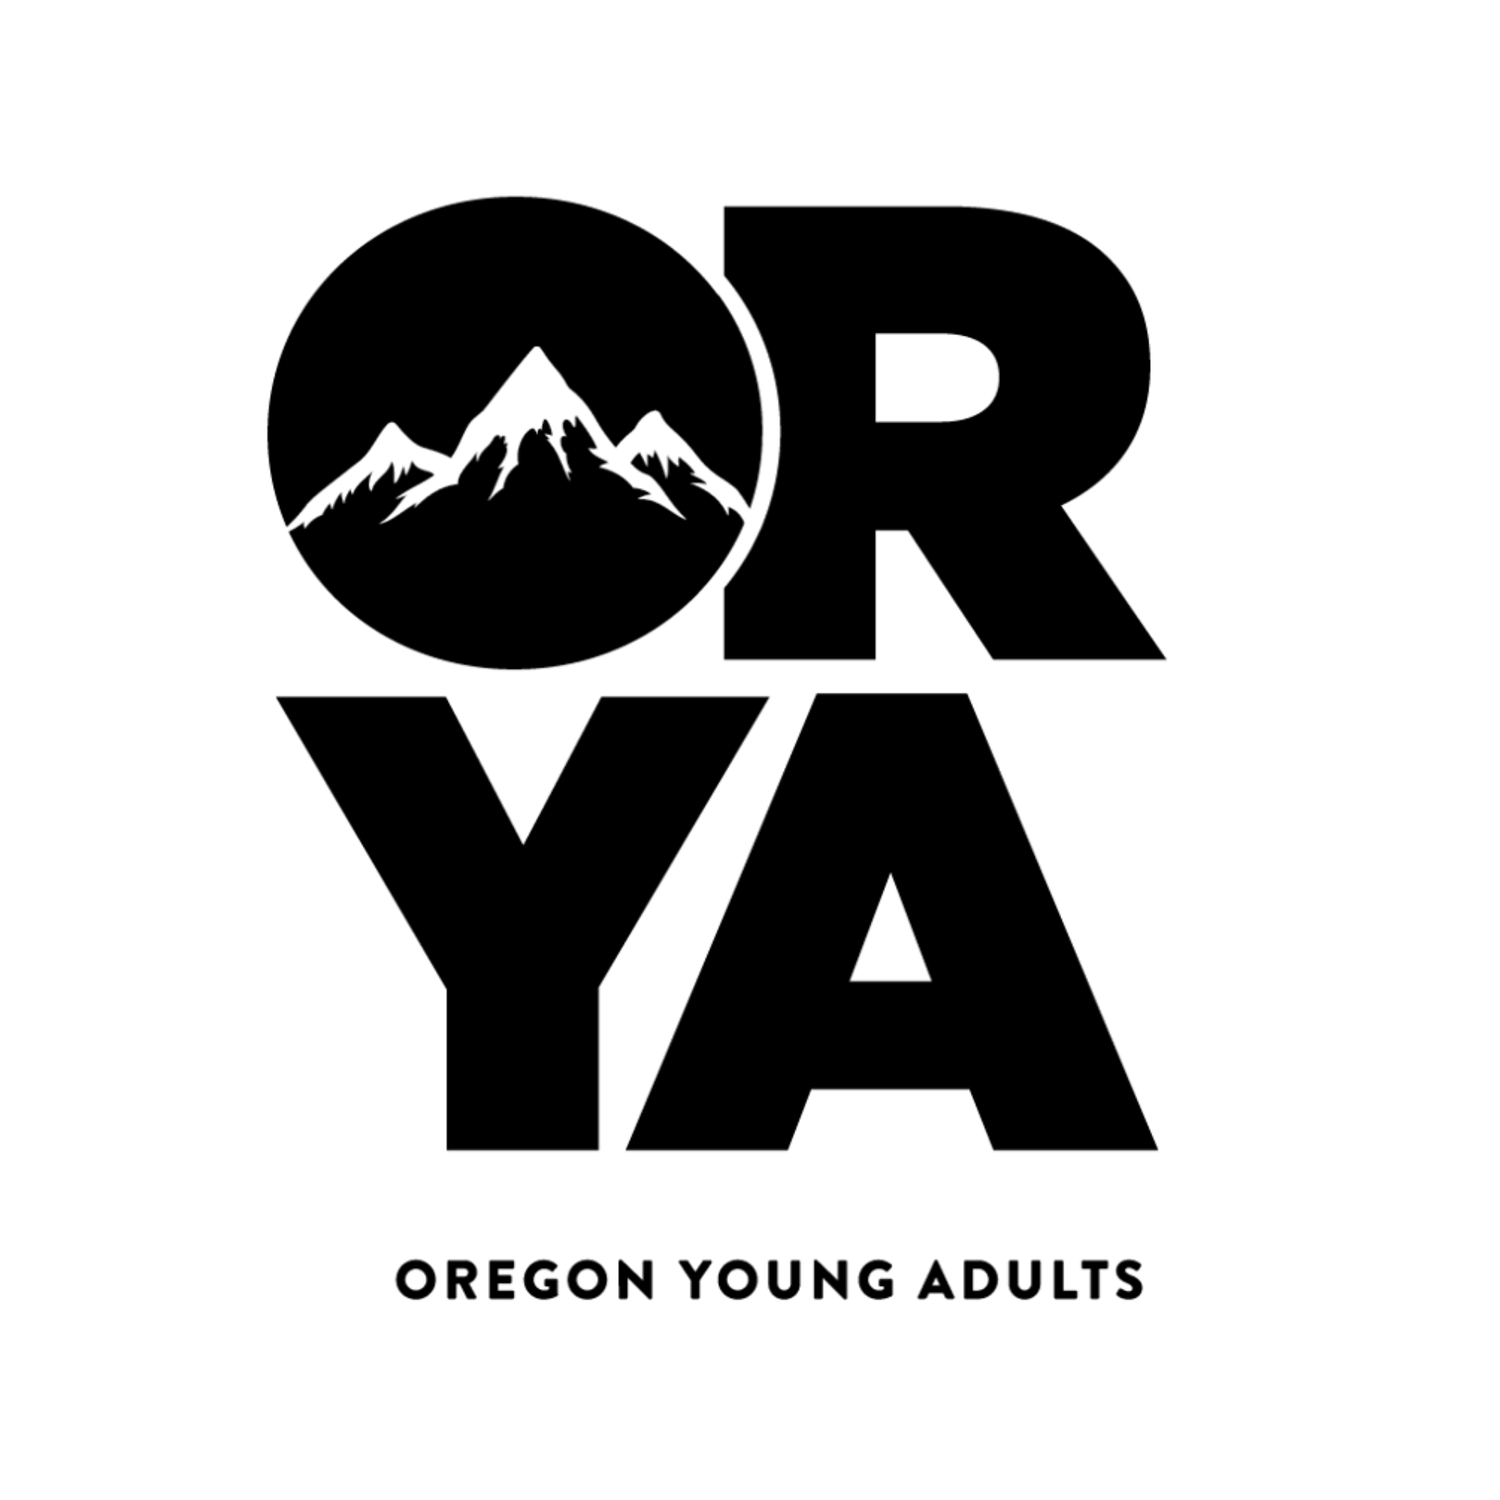 OREGON YOUNG ADULTS